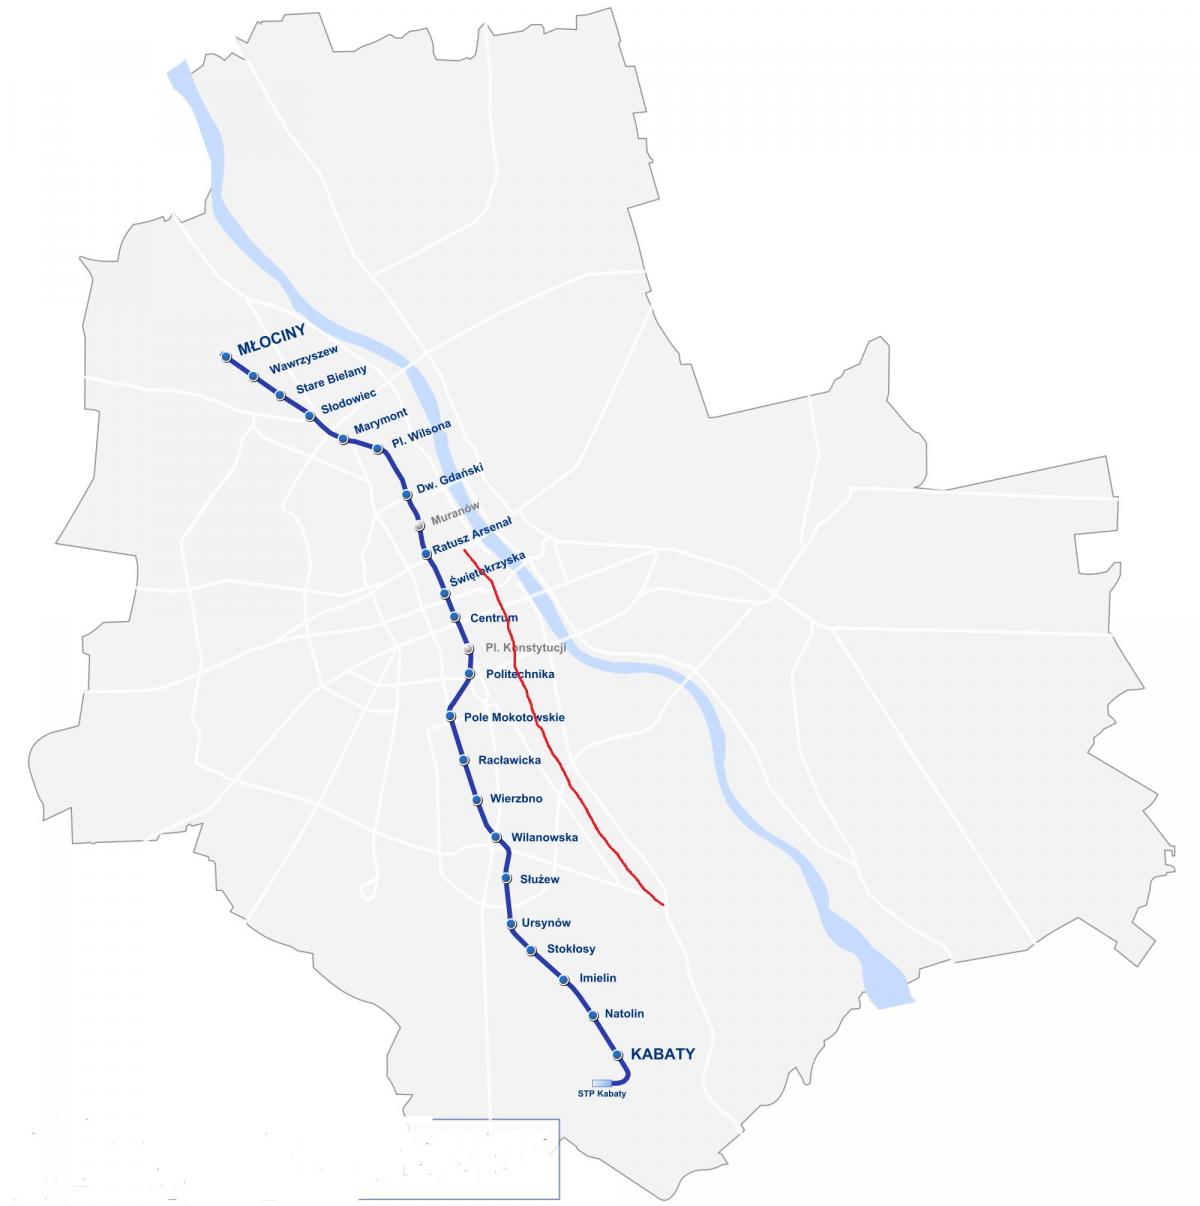 Kort over Warszawa royal route 